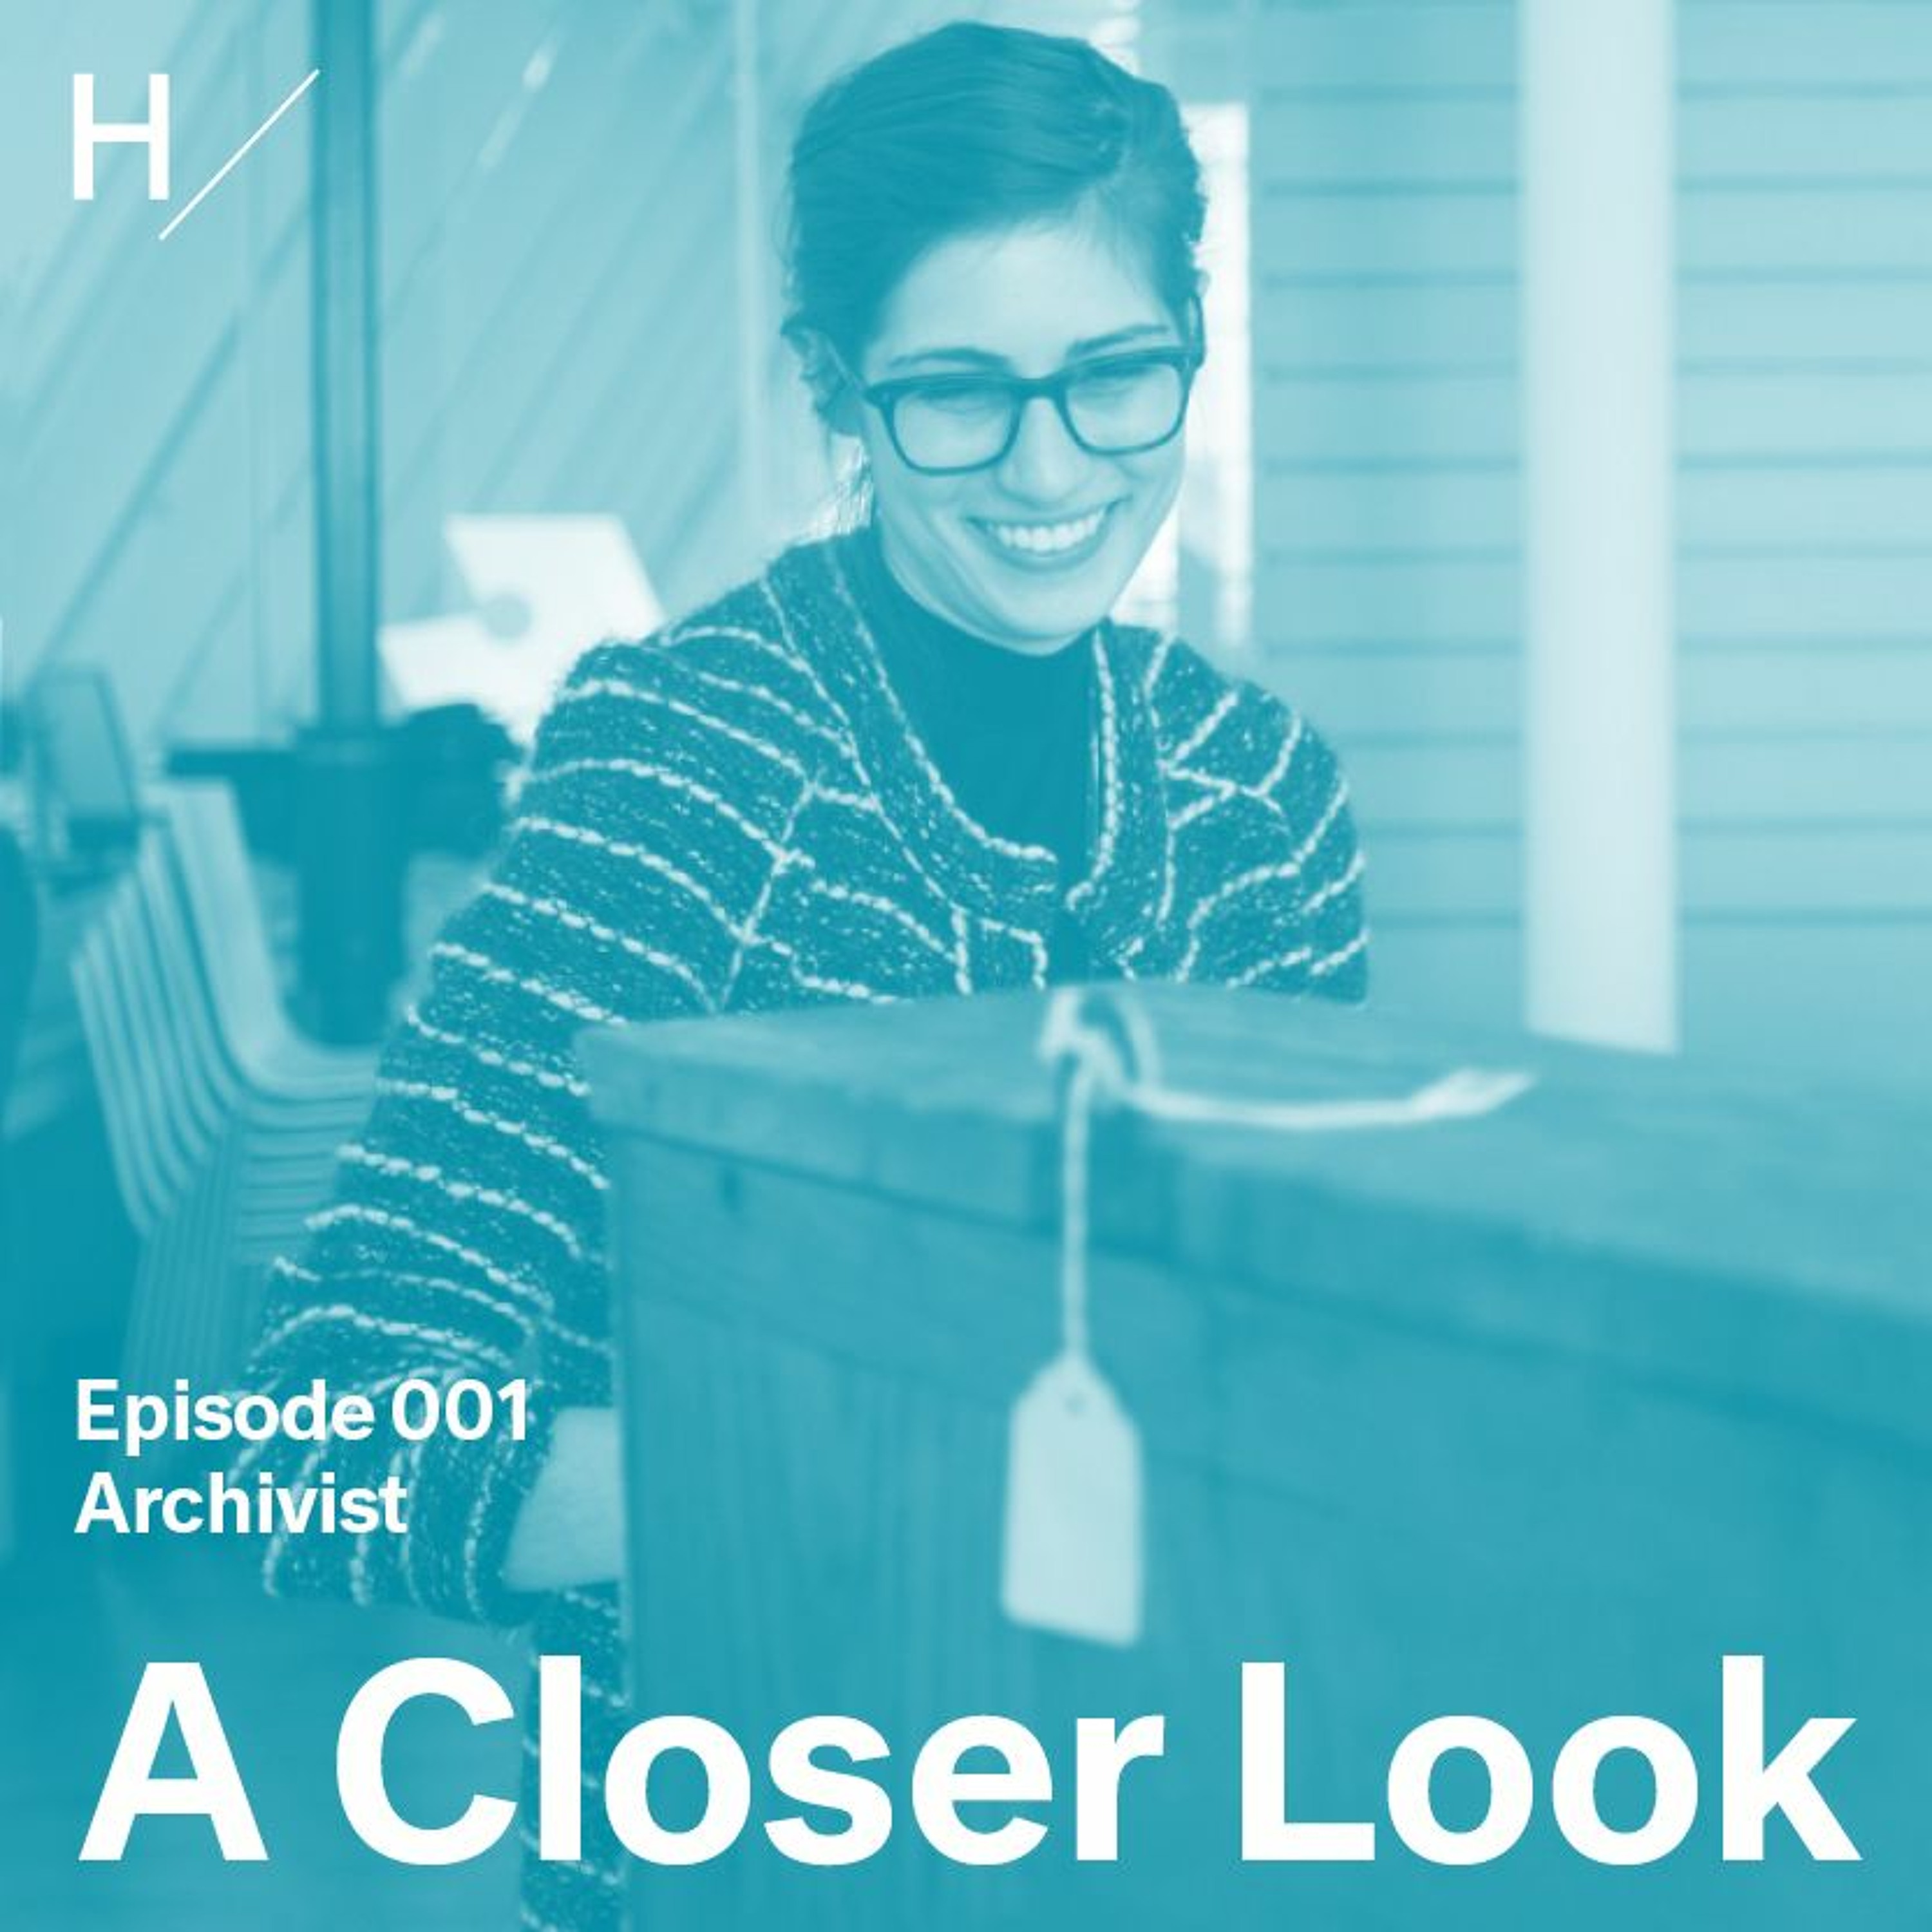 A Closer Look: Episode 1, The Archivist